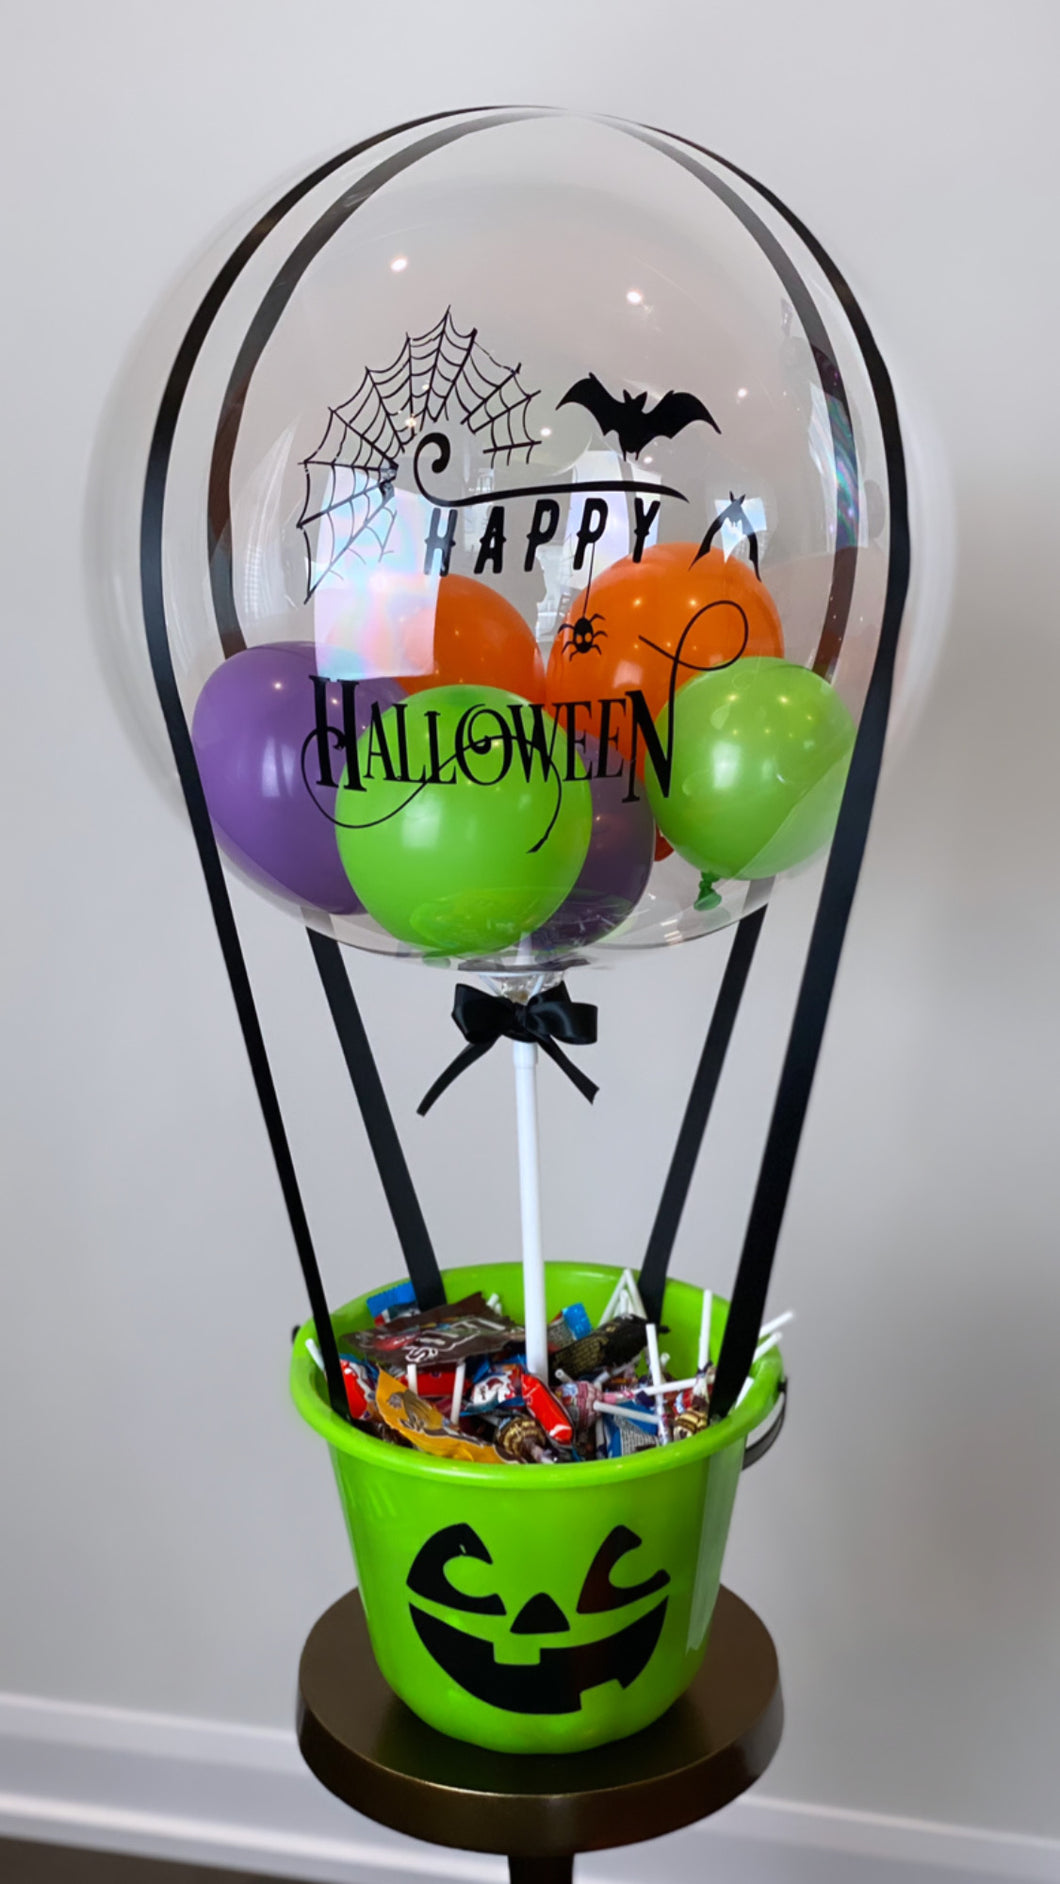 Halloween Hot Air Balloon